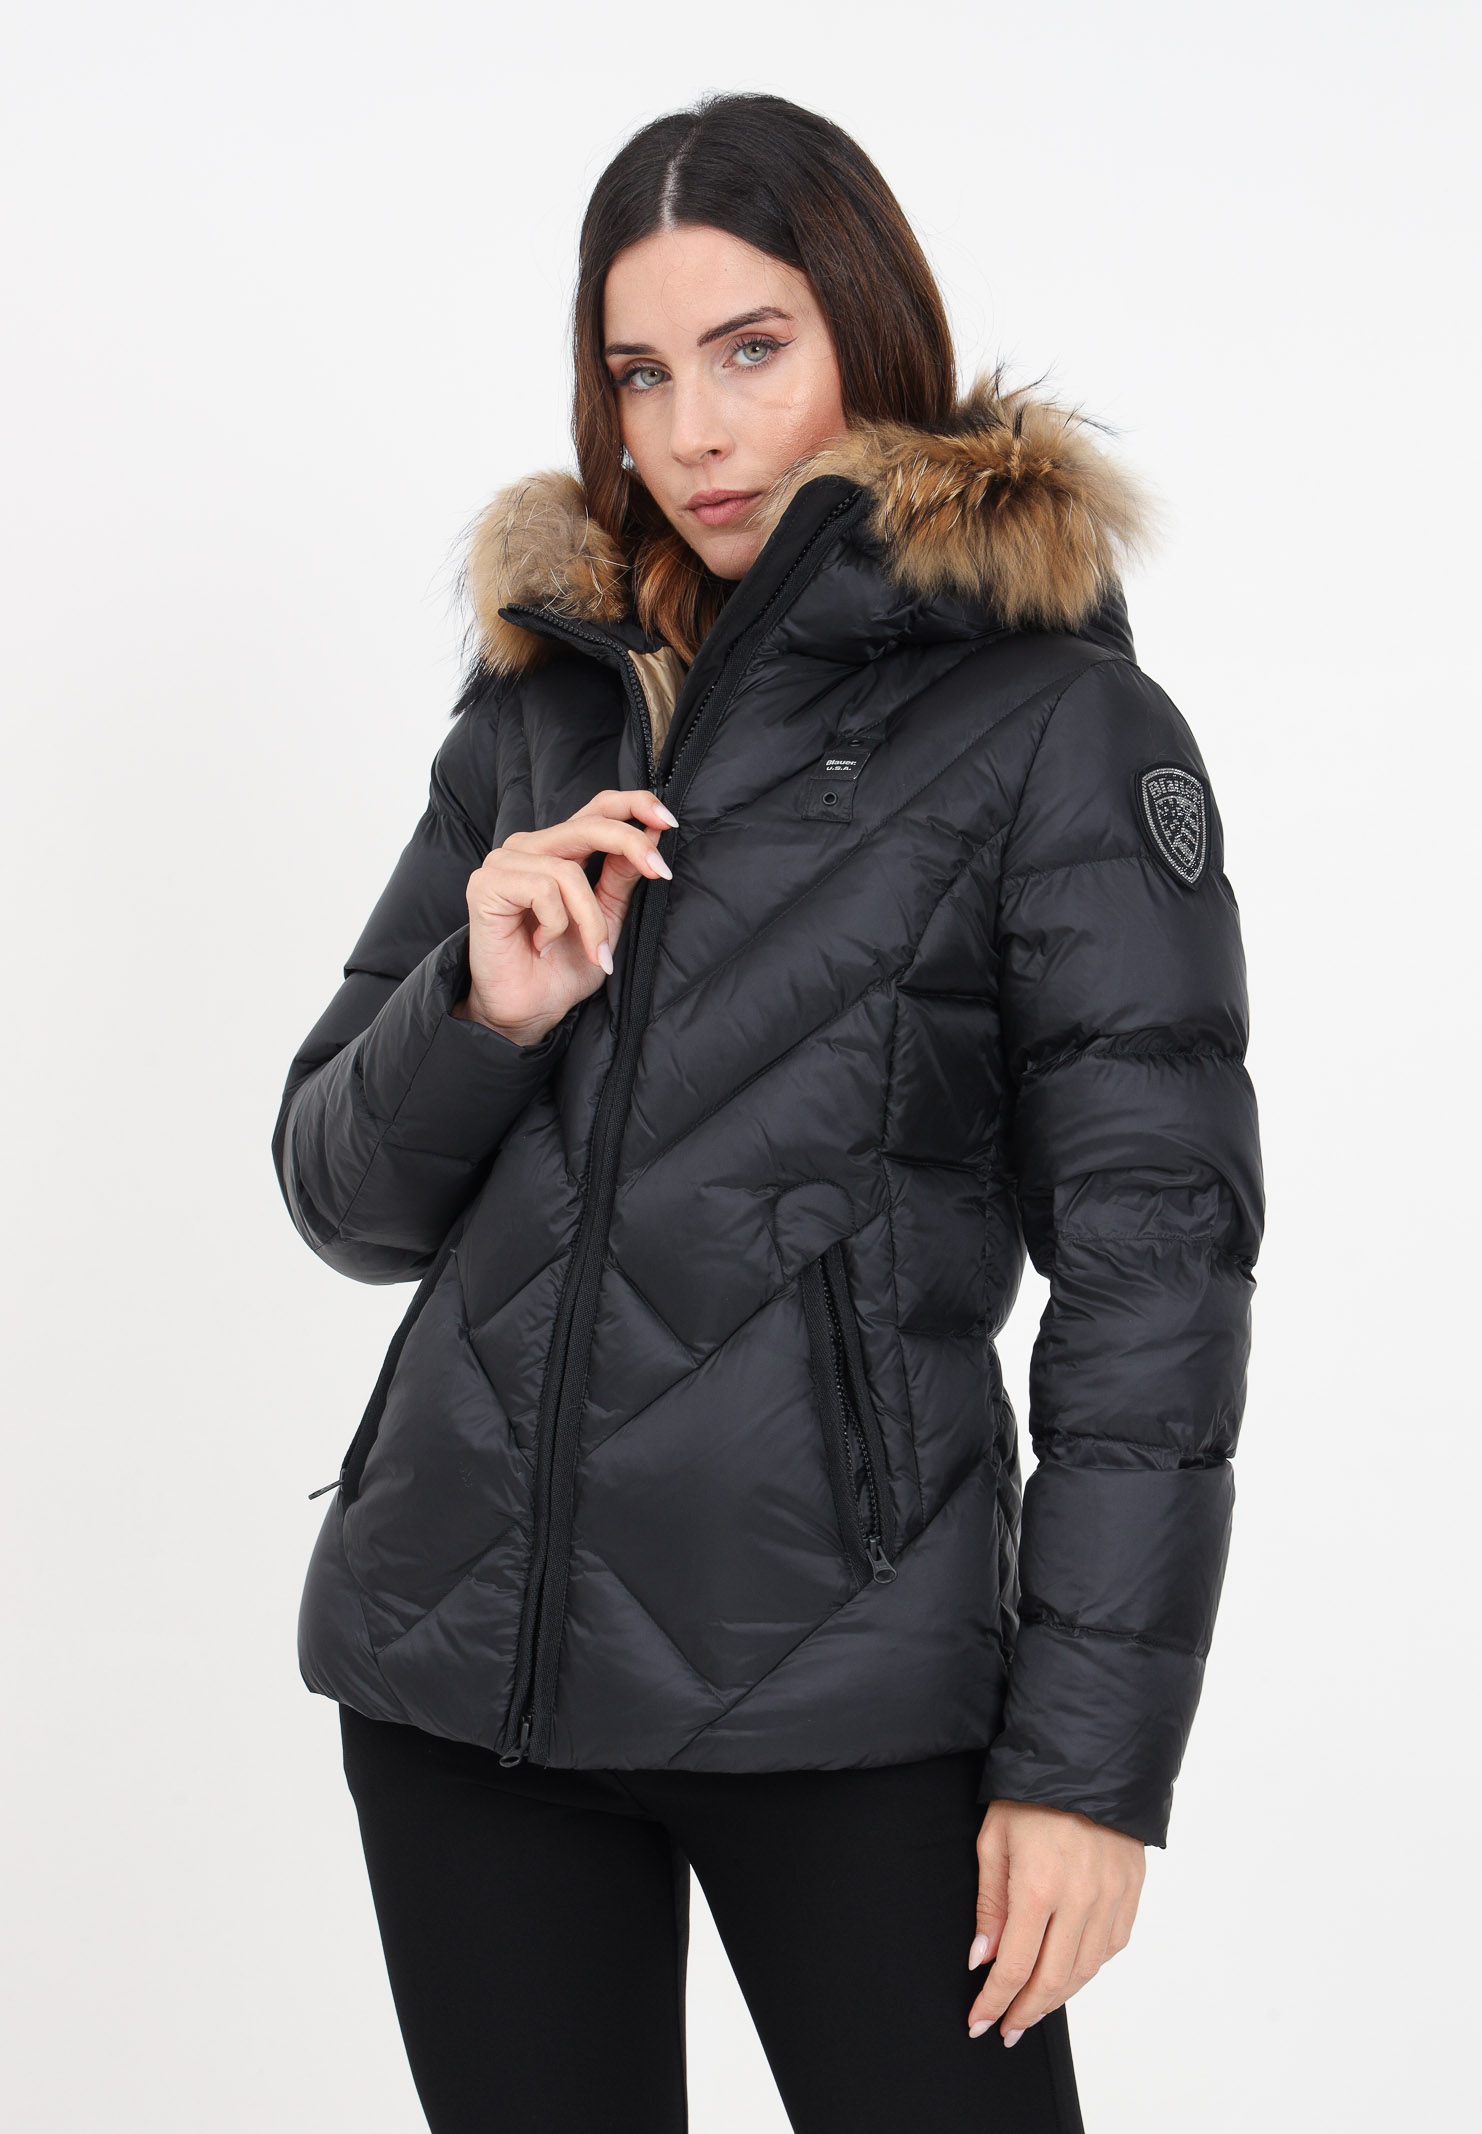 Black down jacket with hood and rhinestone logo for women - BLAUER ...